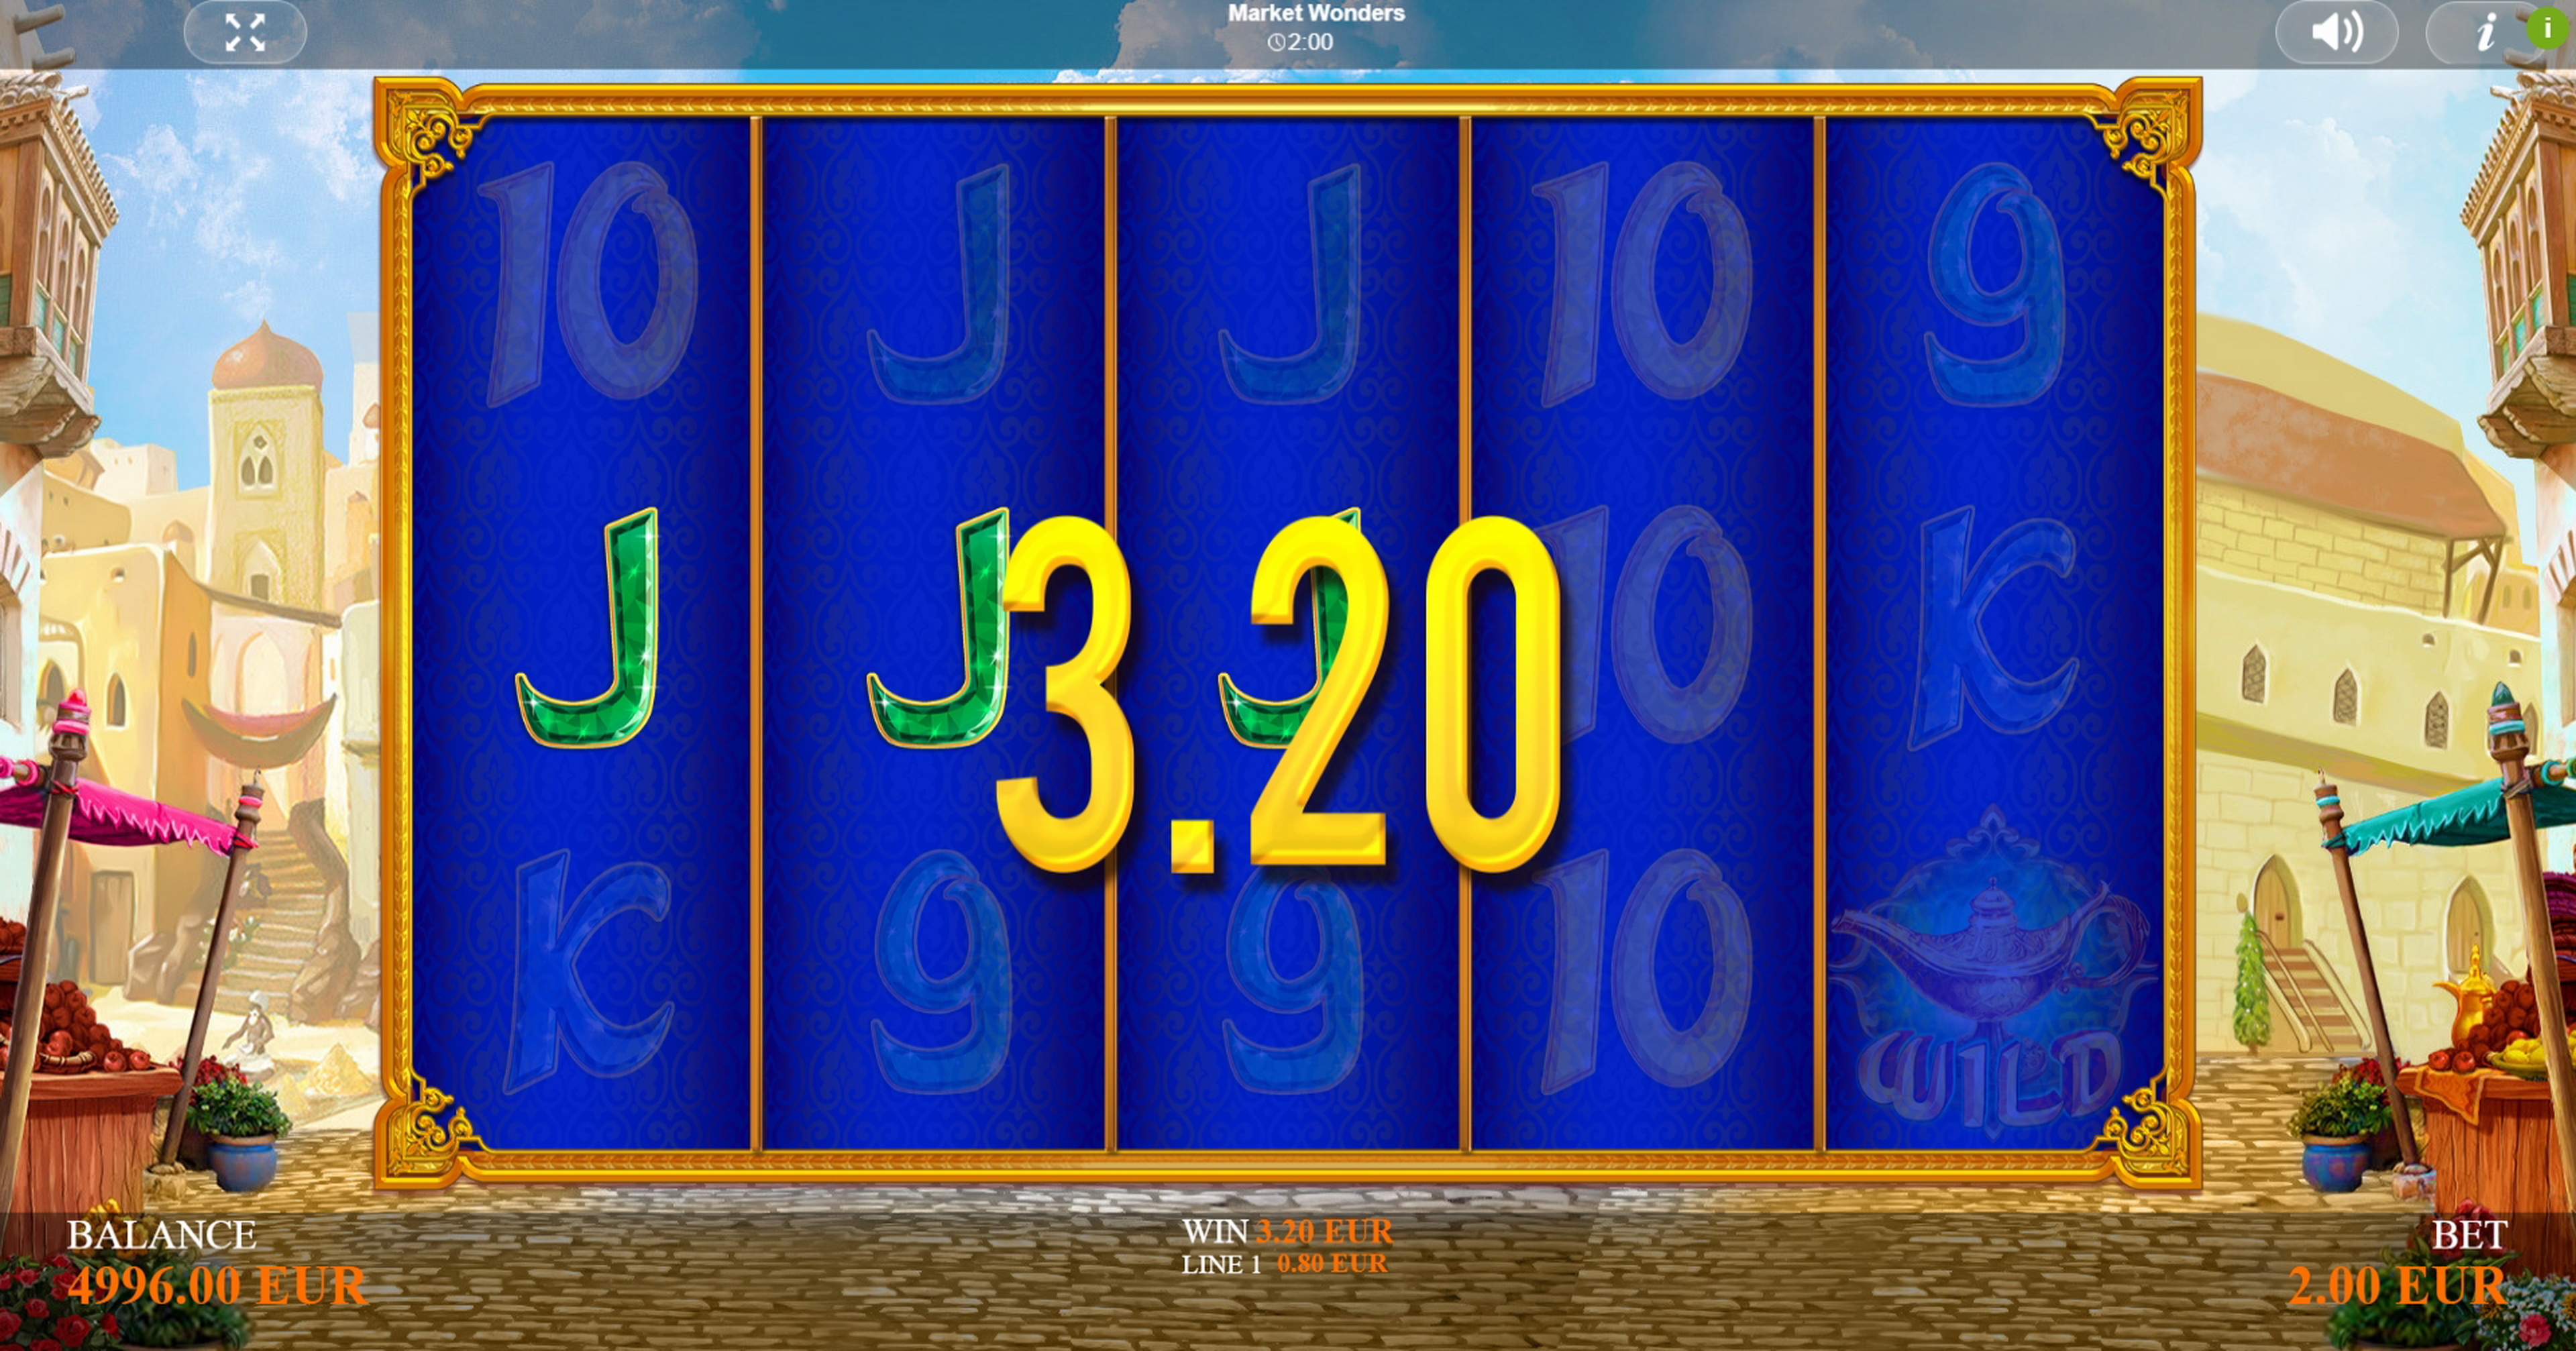 Win Money in Market Wonders Free Slot Game by betiXon